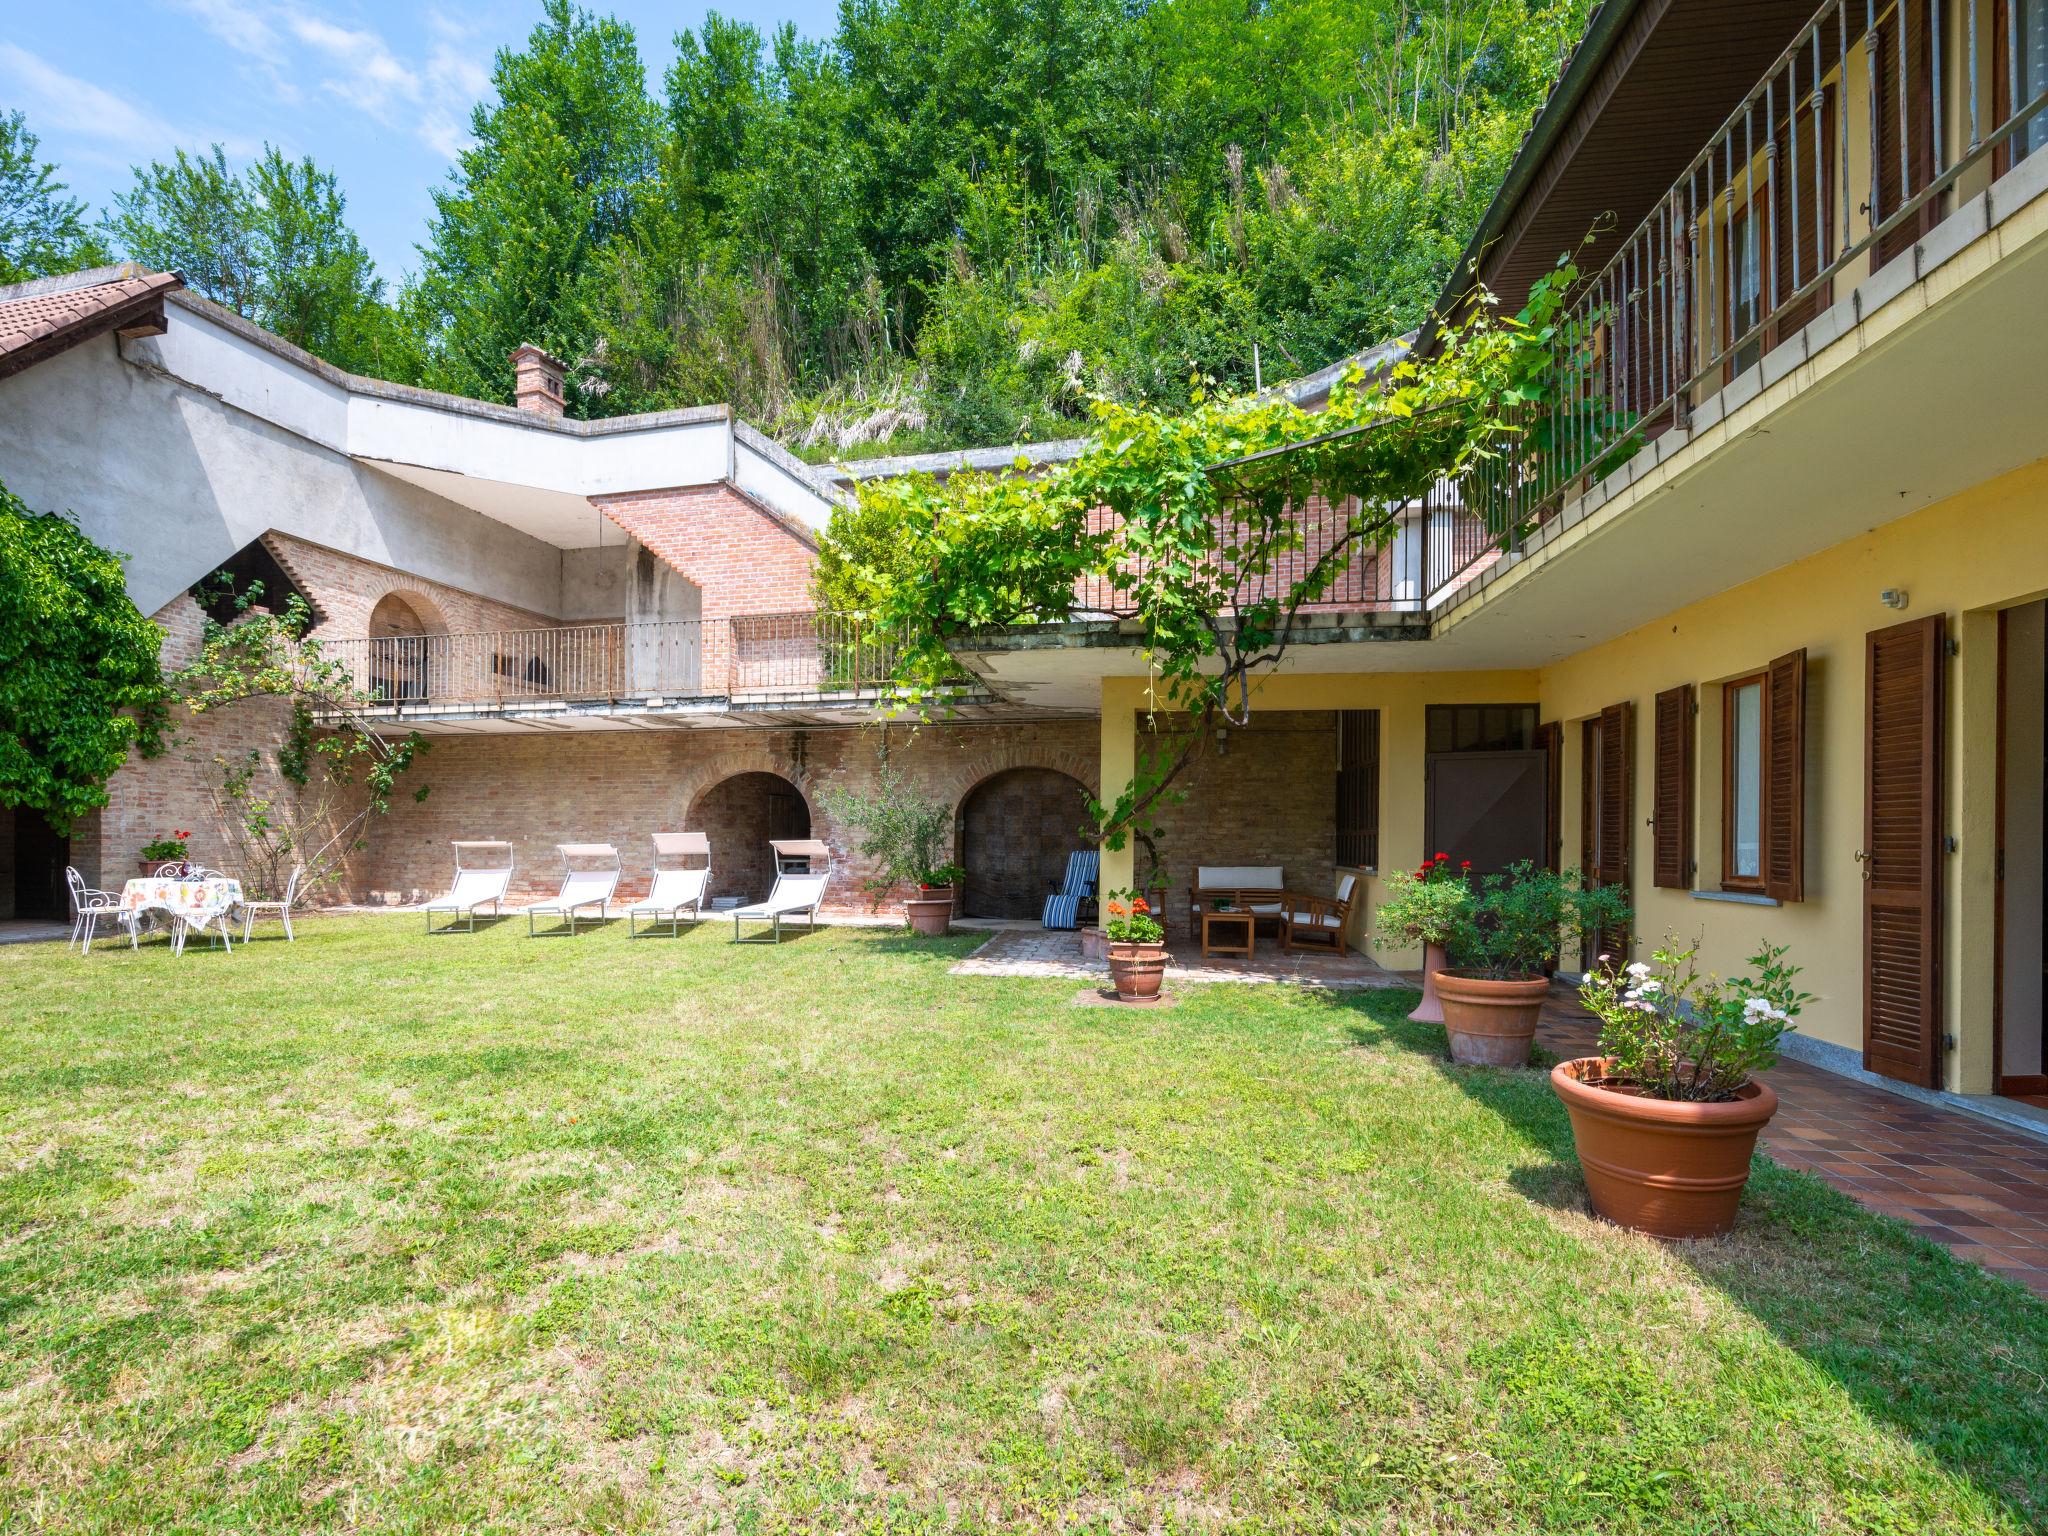 Photo 25 - Maison de 3 chambres à Cortiglione avec jardin et terrasse